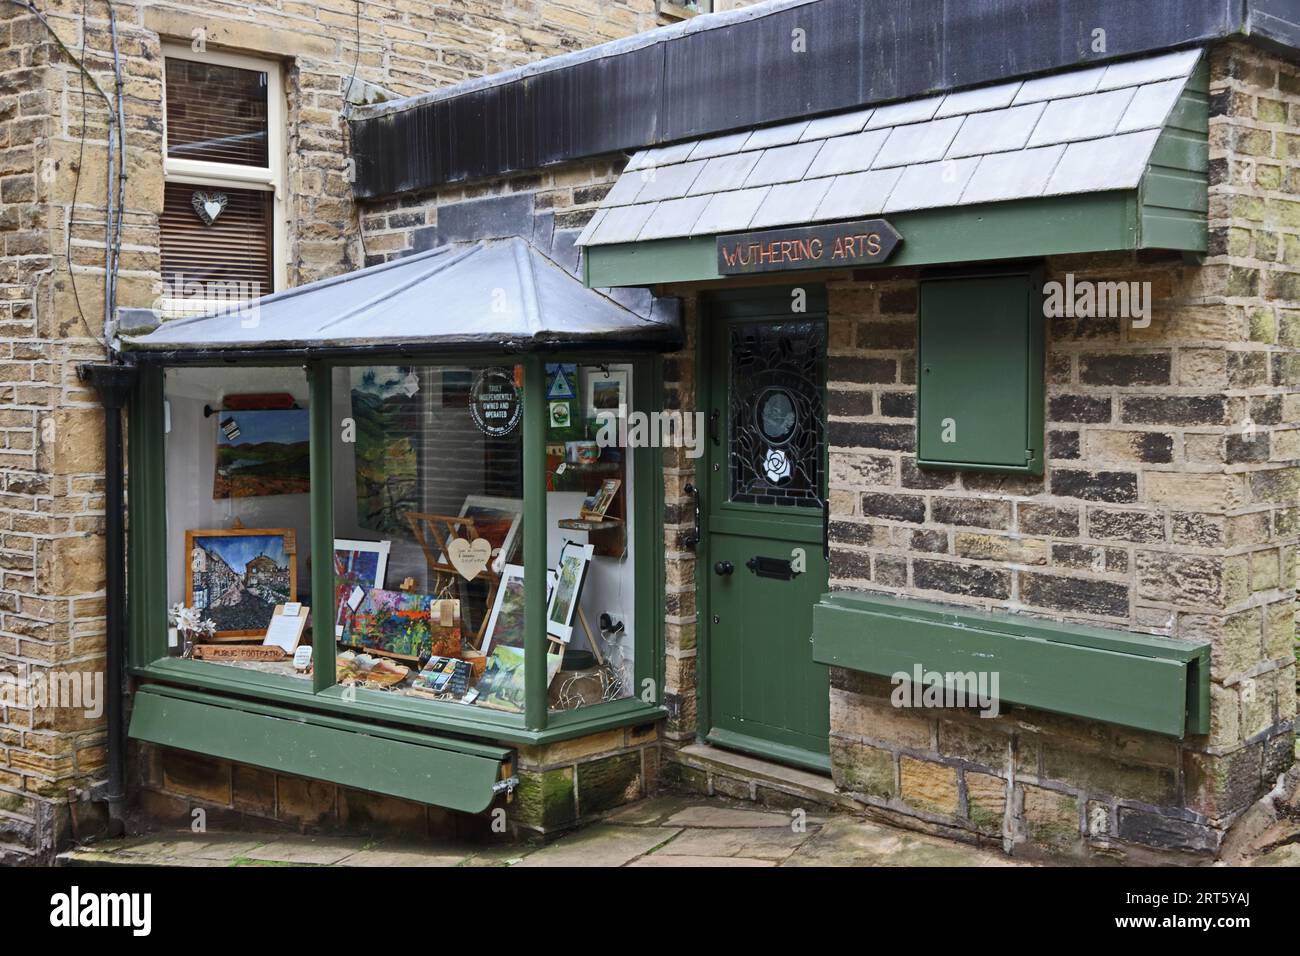 Wuthering Arts Shop, Haworth Foto Stock